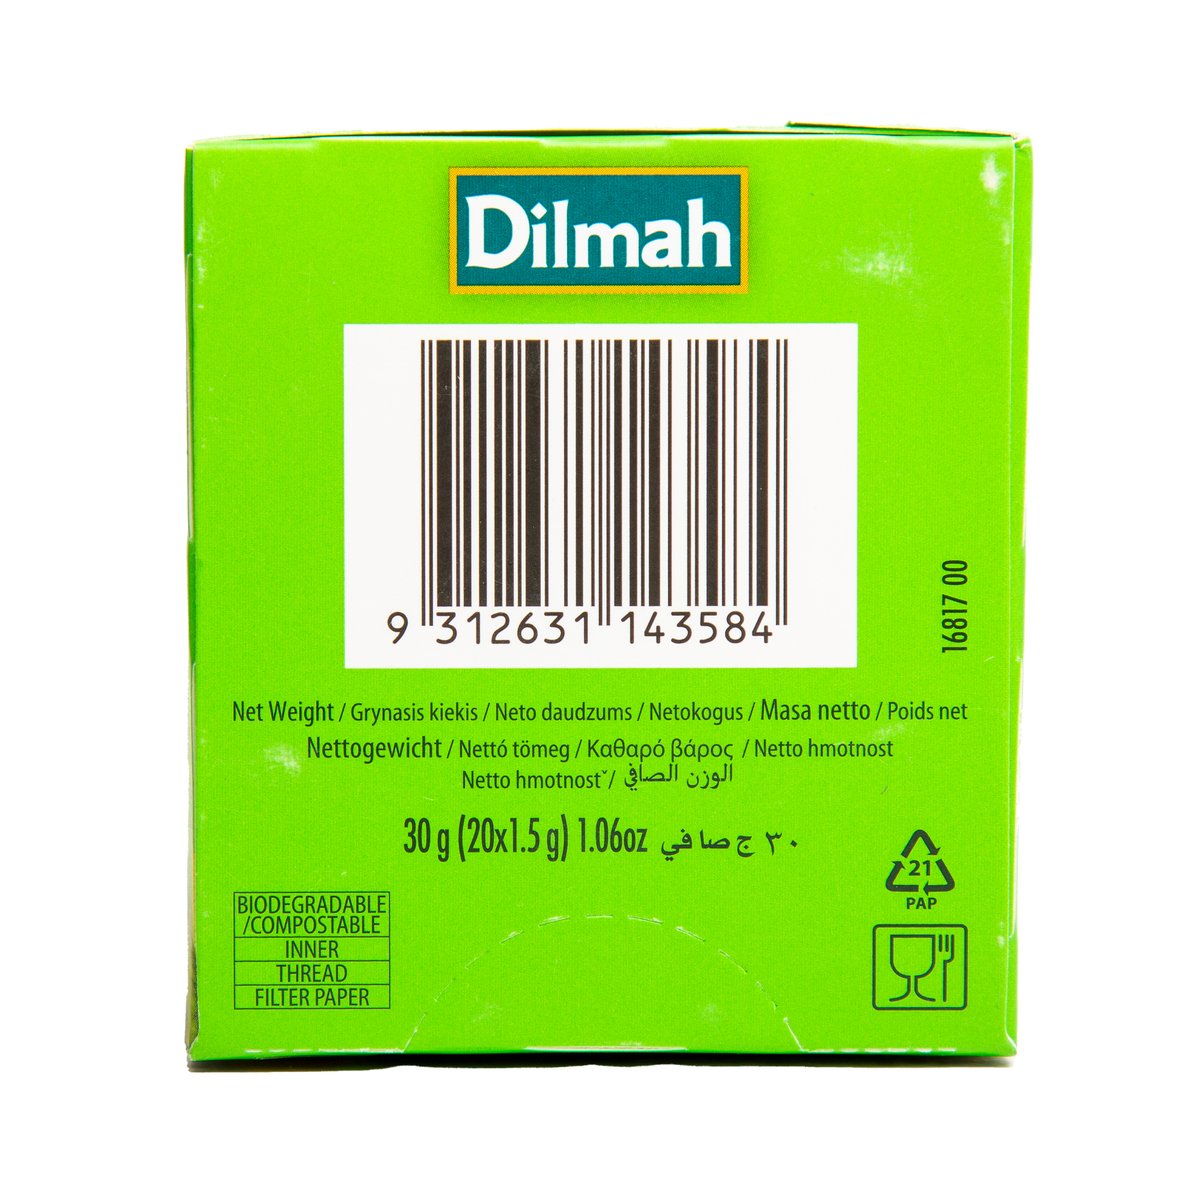 Dilmah Pure Green Tea 20 Teabags 30 g